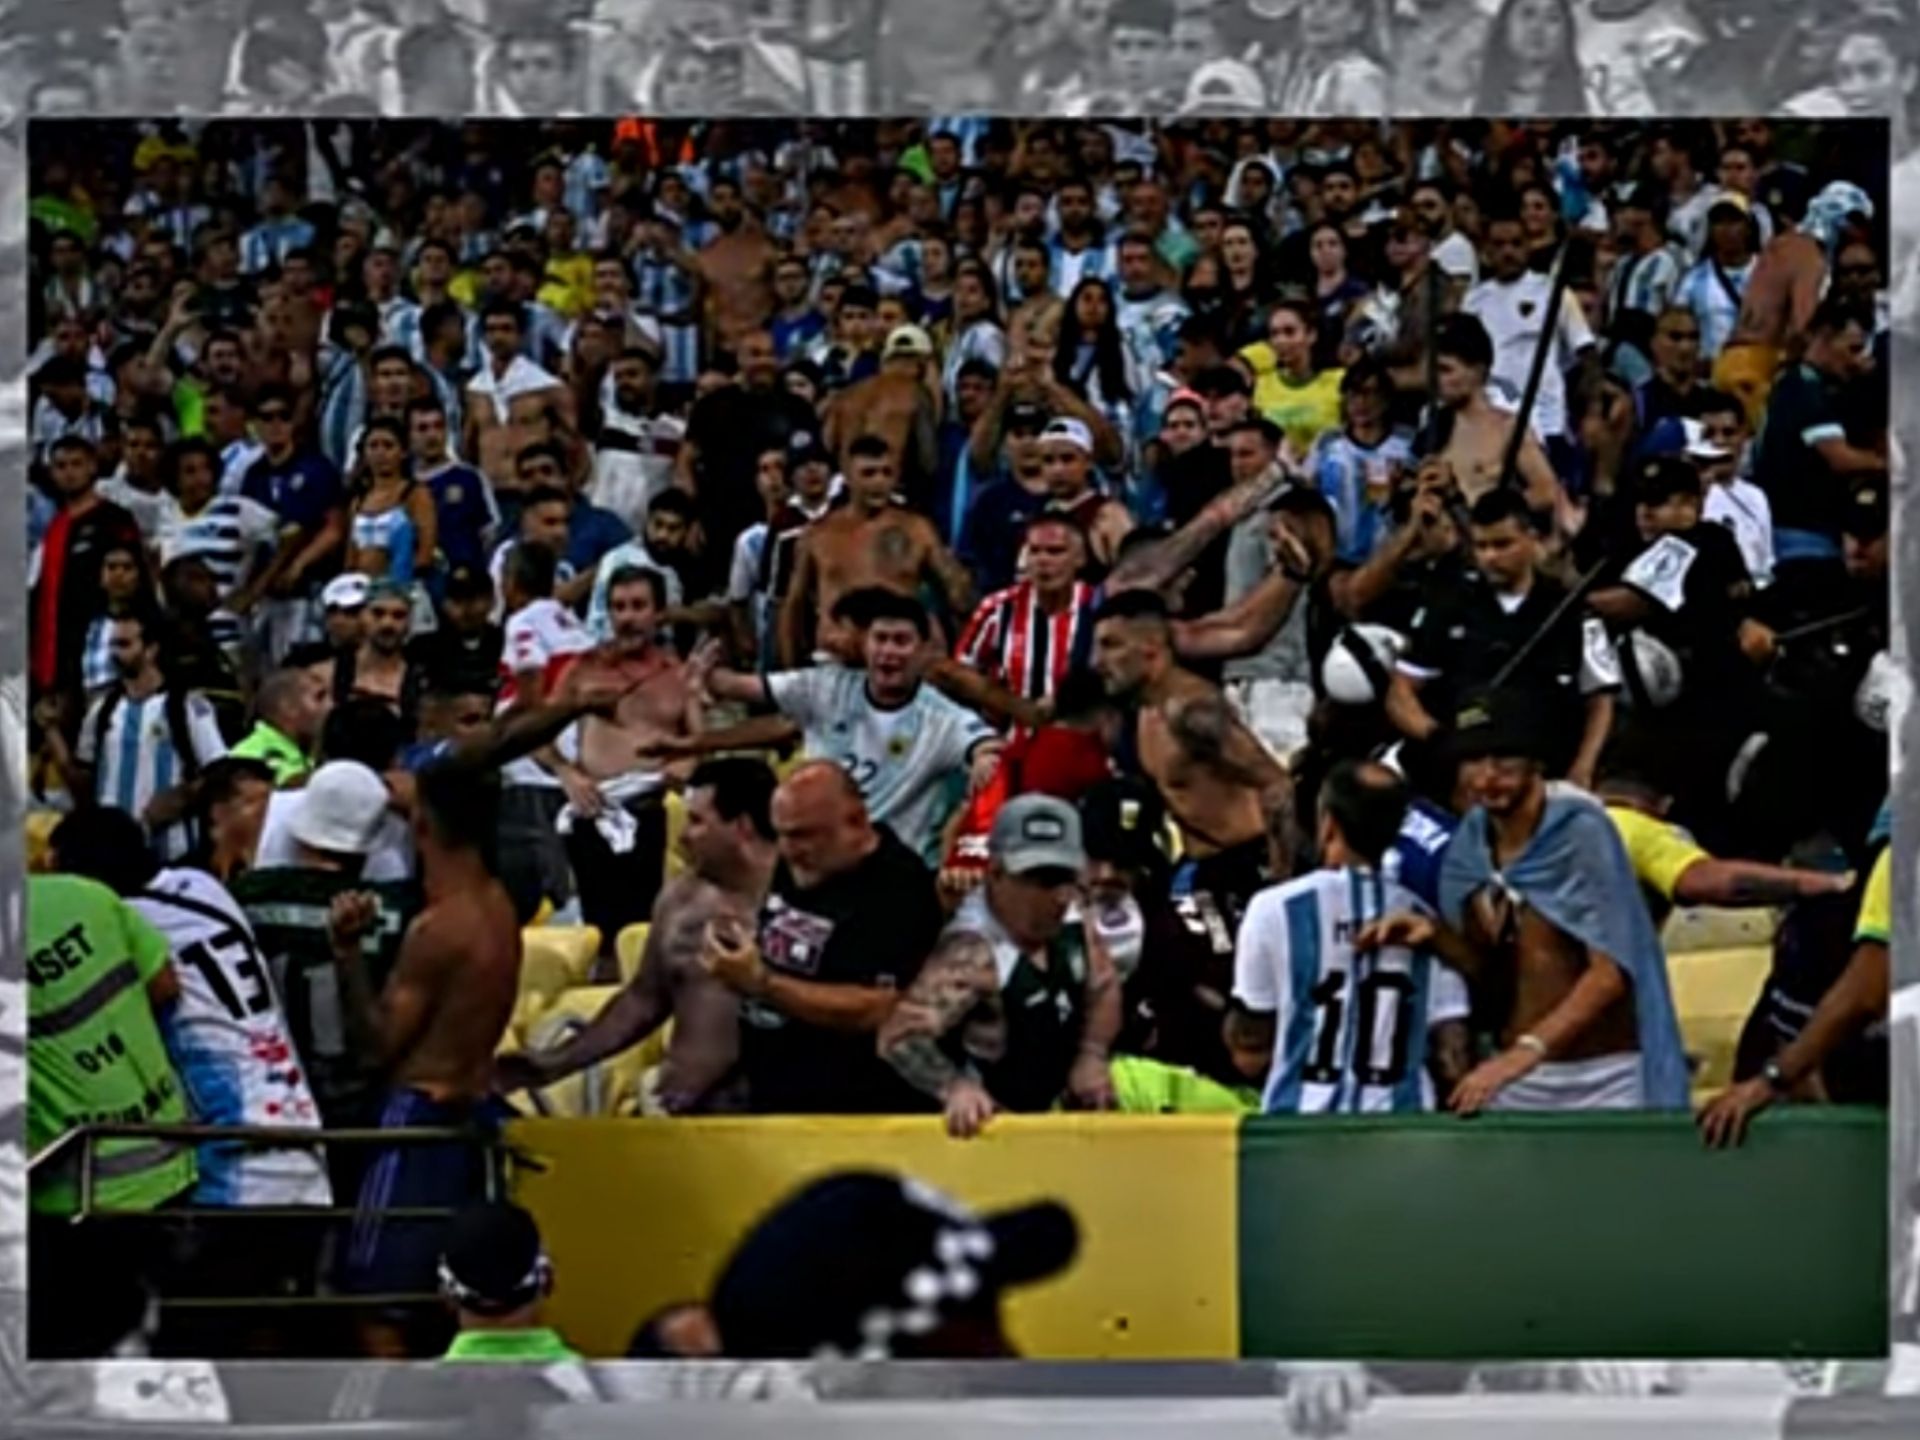 Momen Kerusuhan anatara suporter dilaga Argentina Vs Brazil